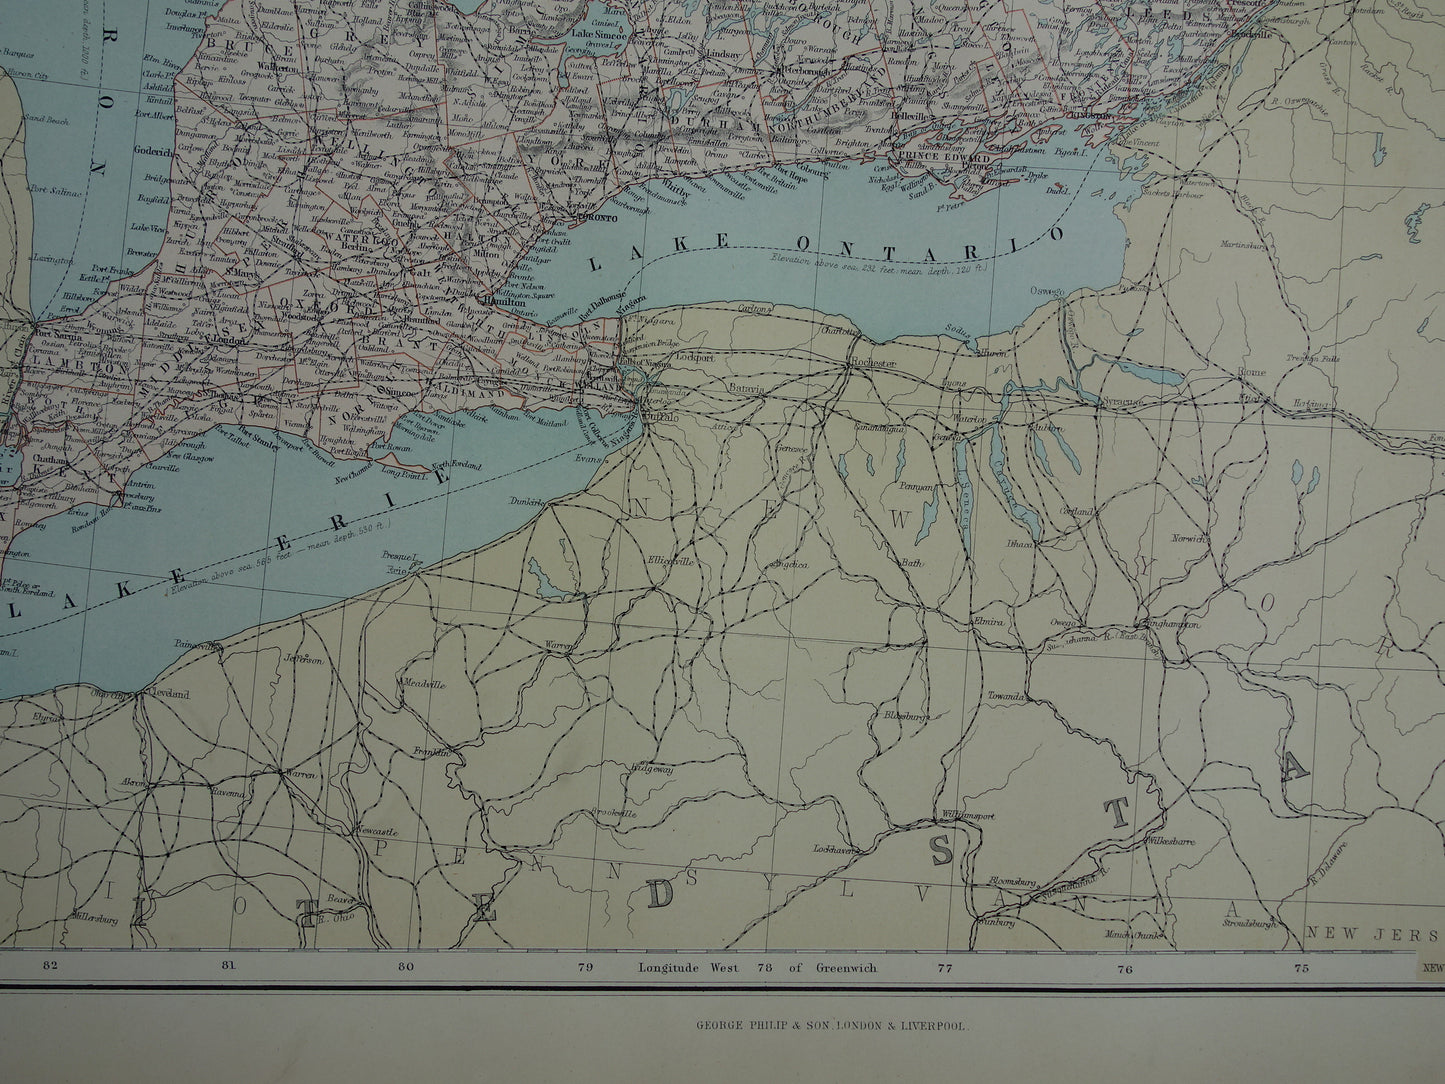 CANADA Grote antieke landkaart van Ontario en Quebec 1890 oude Engelse kaart poster Montréal Toronto Ottawa